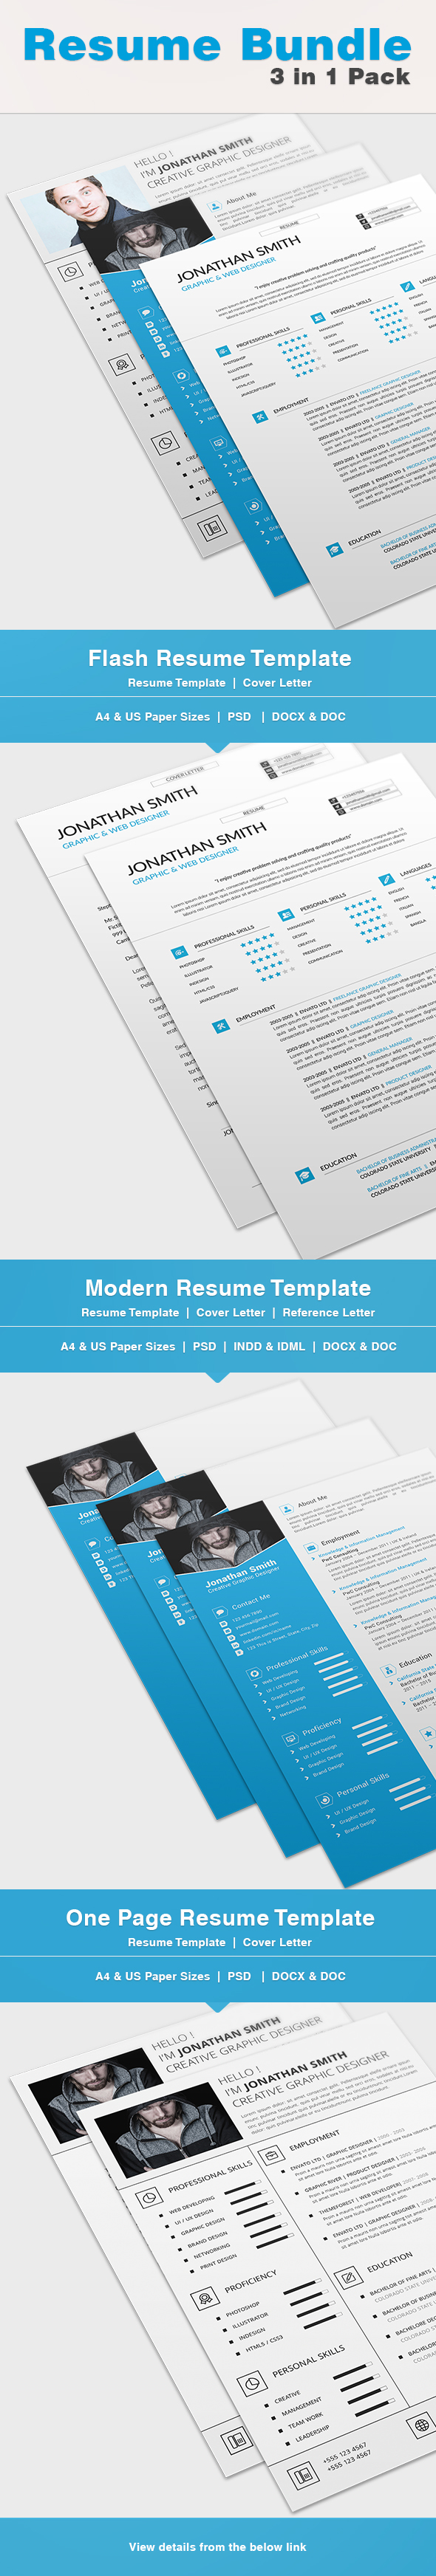 Resume resume bundle modern clean simple Maruf maruf studio professional fresh Minimal Resume Graphic Design Resume word psd InDesign